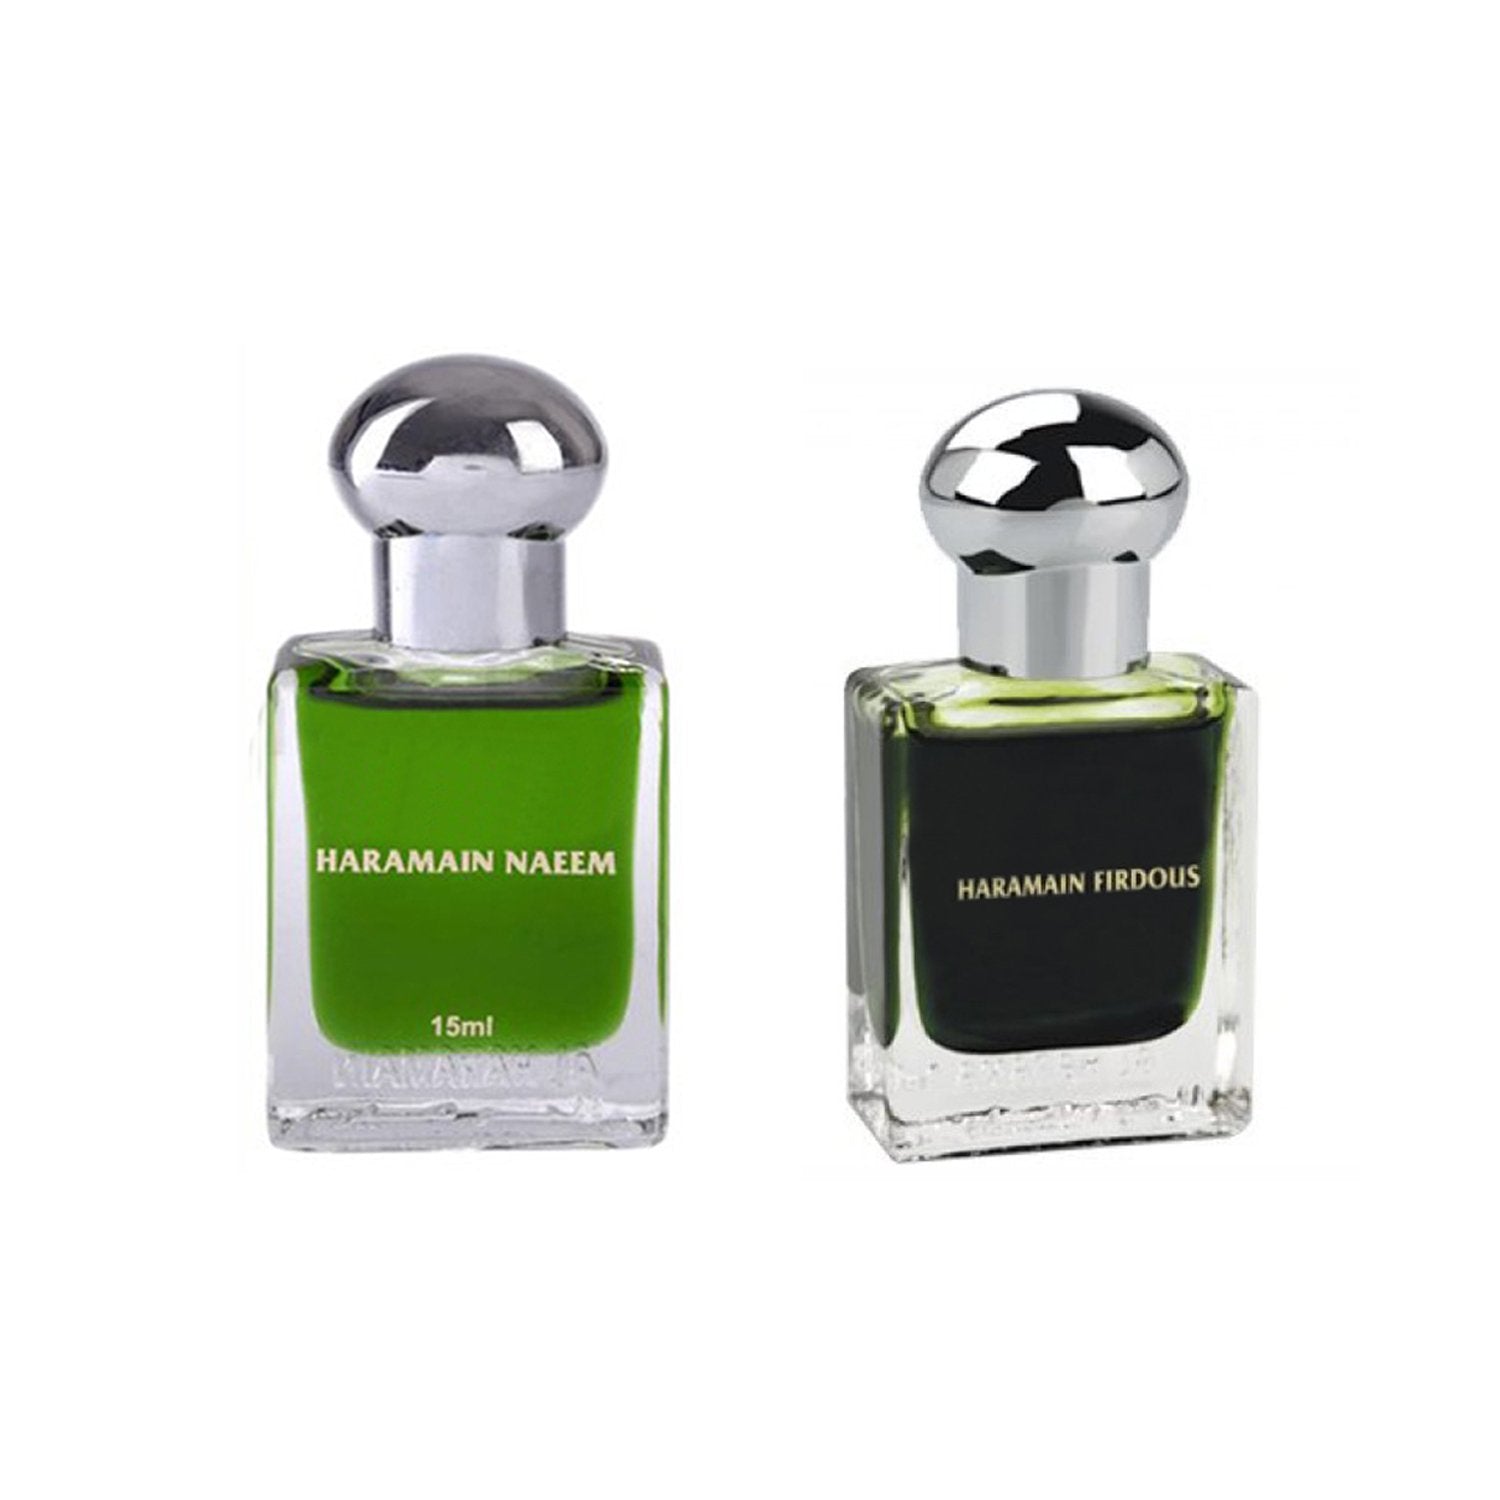 Al Haramain Naeem & Firdous Fragrance Pure Original Roll on Perfume Oil Pack of 2 (Attar) - 2 x 15 ml